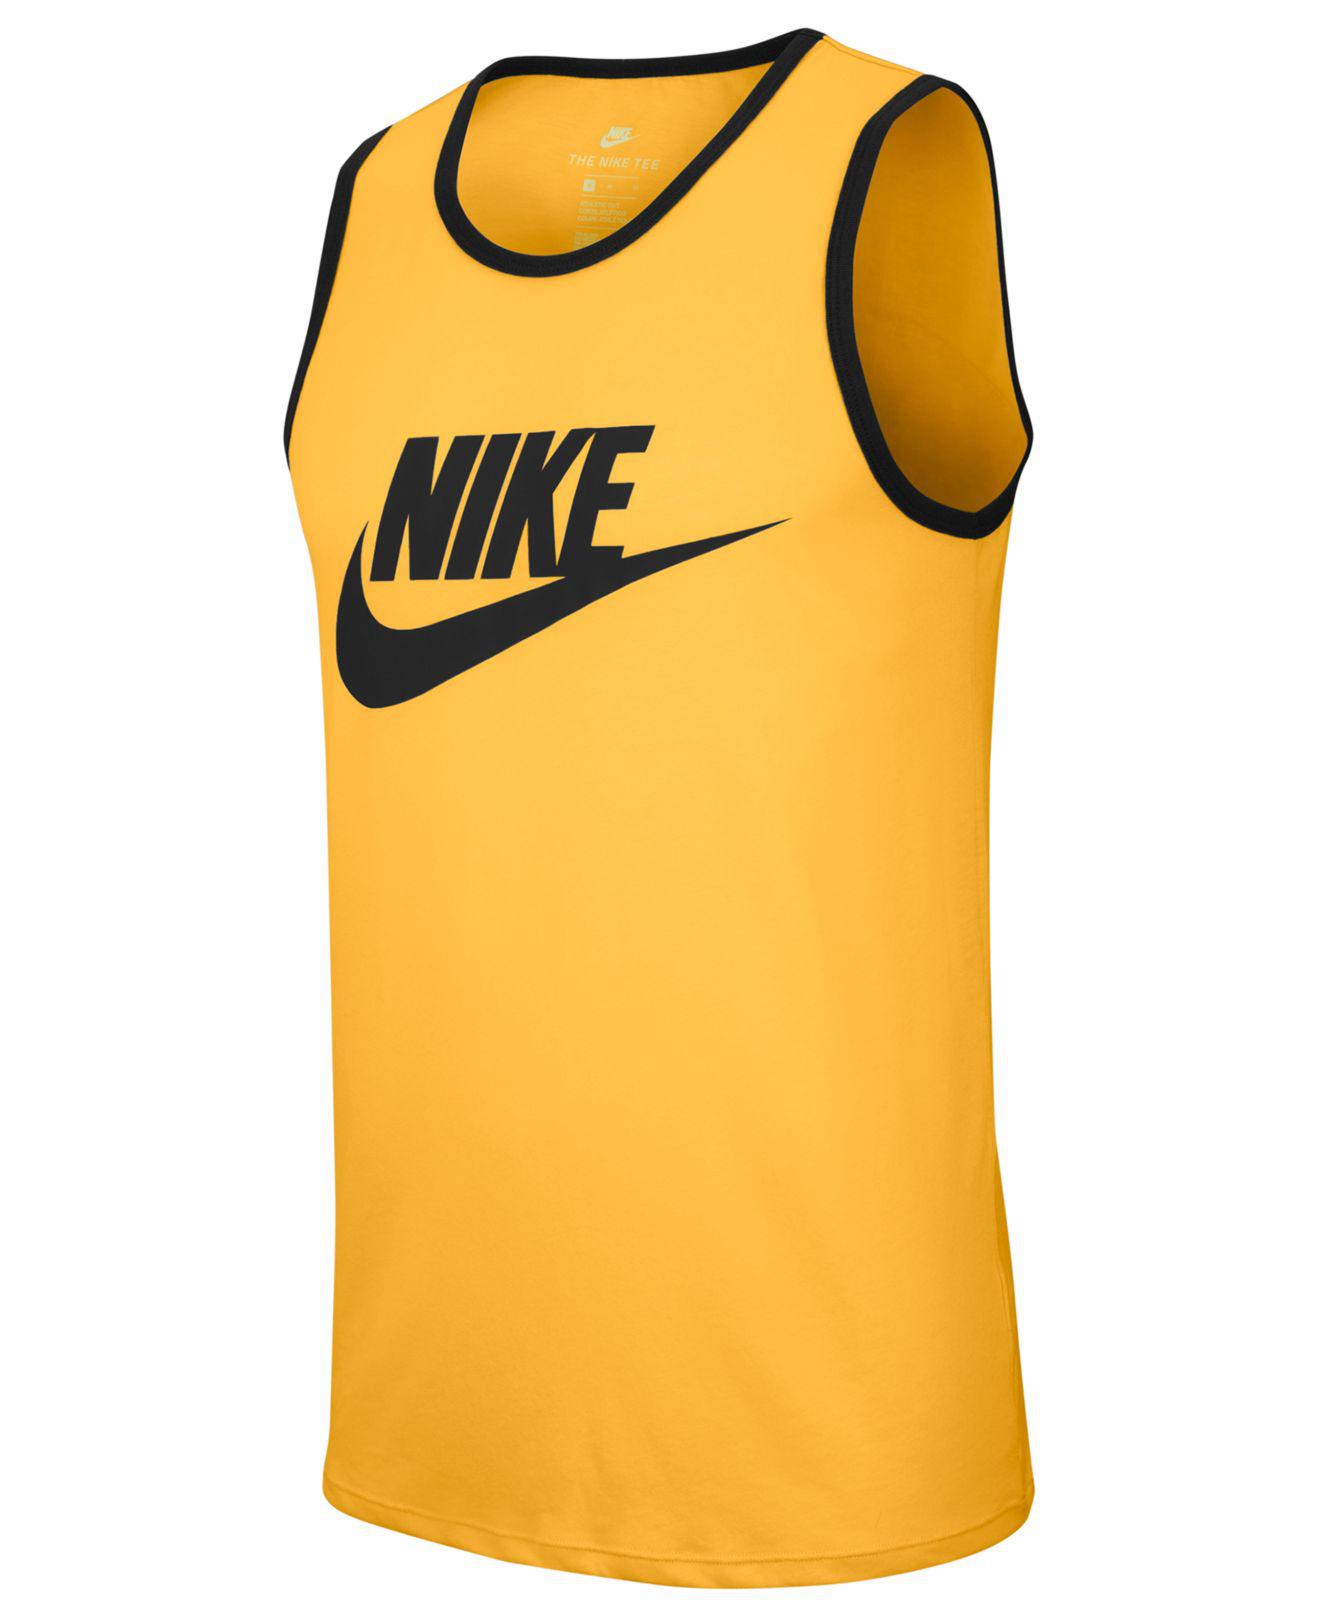 Nike Men's Tank Top - Yellow - XXXL